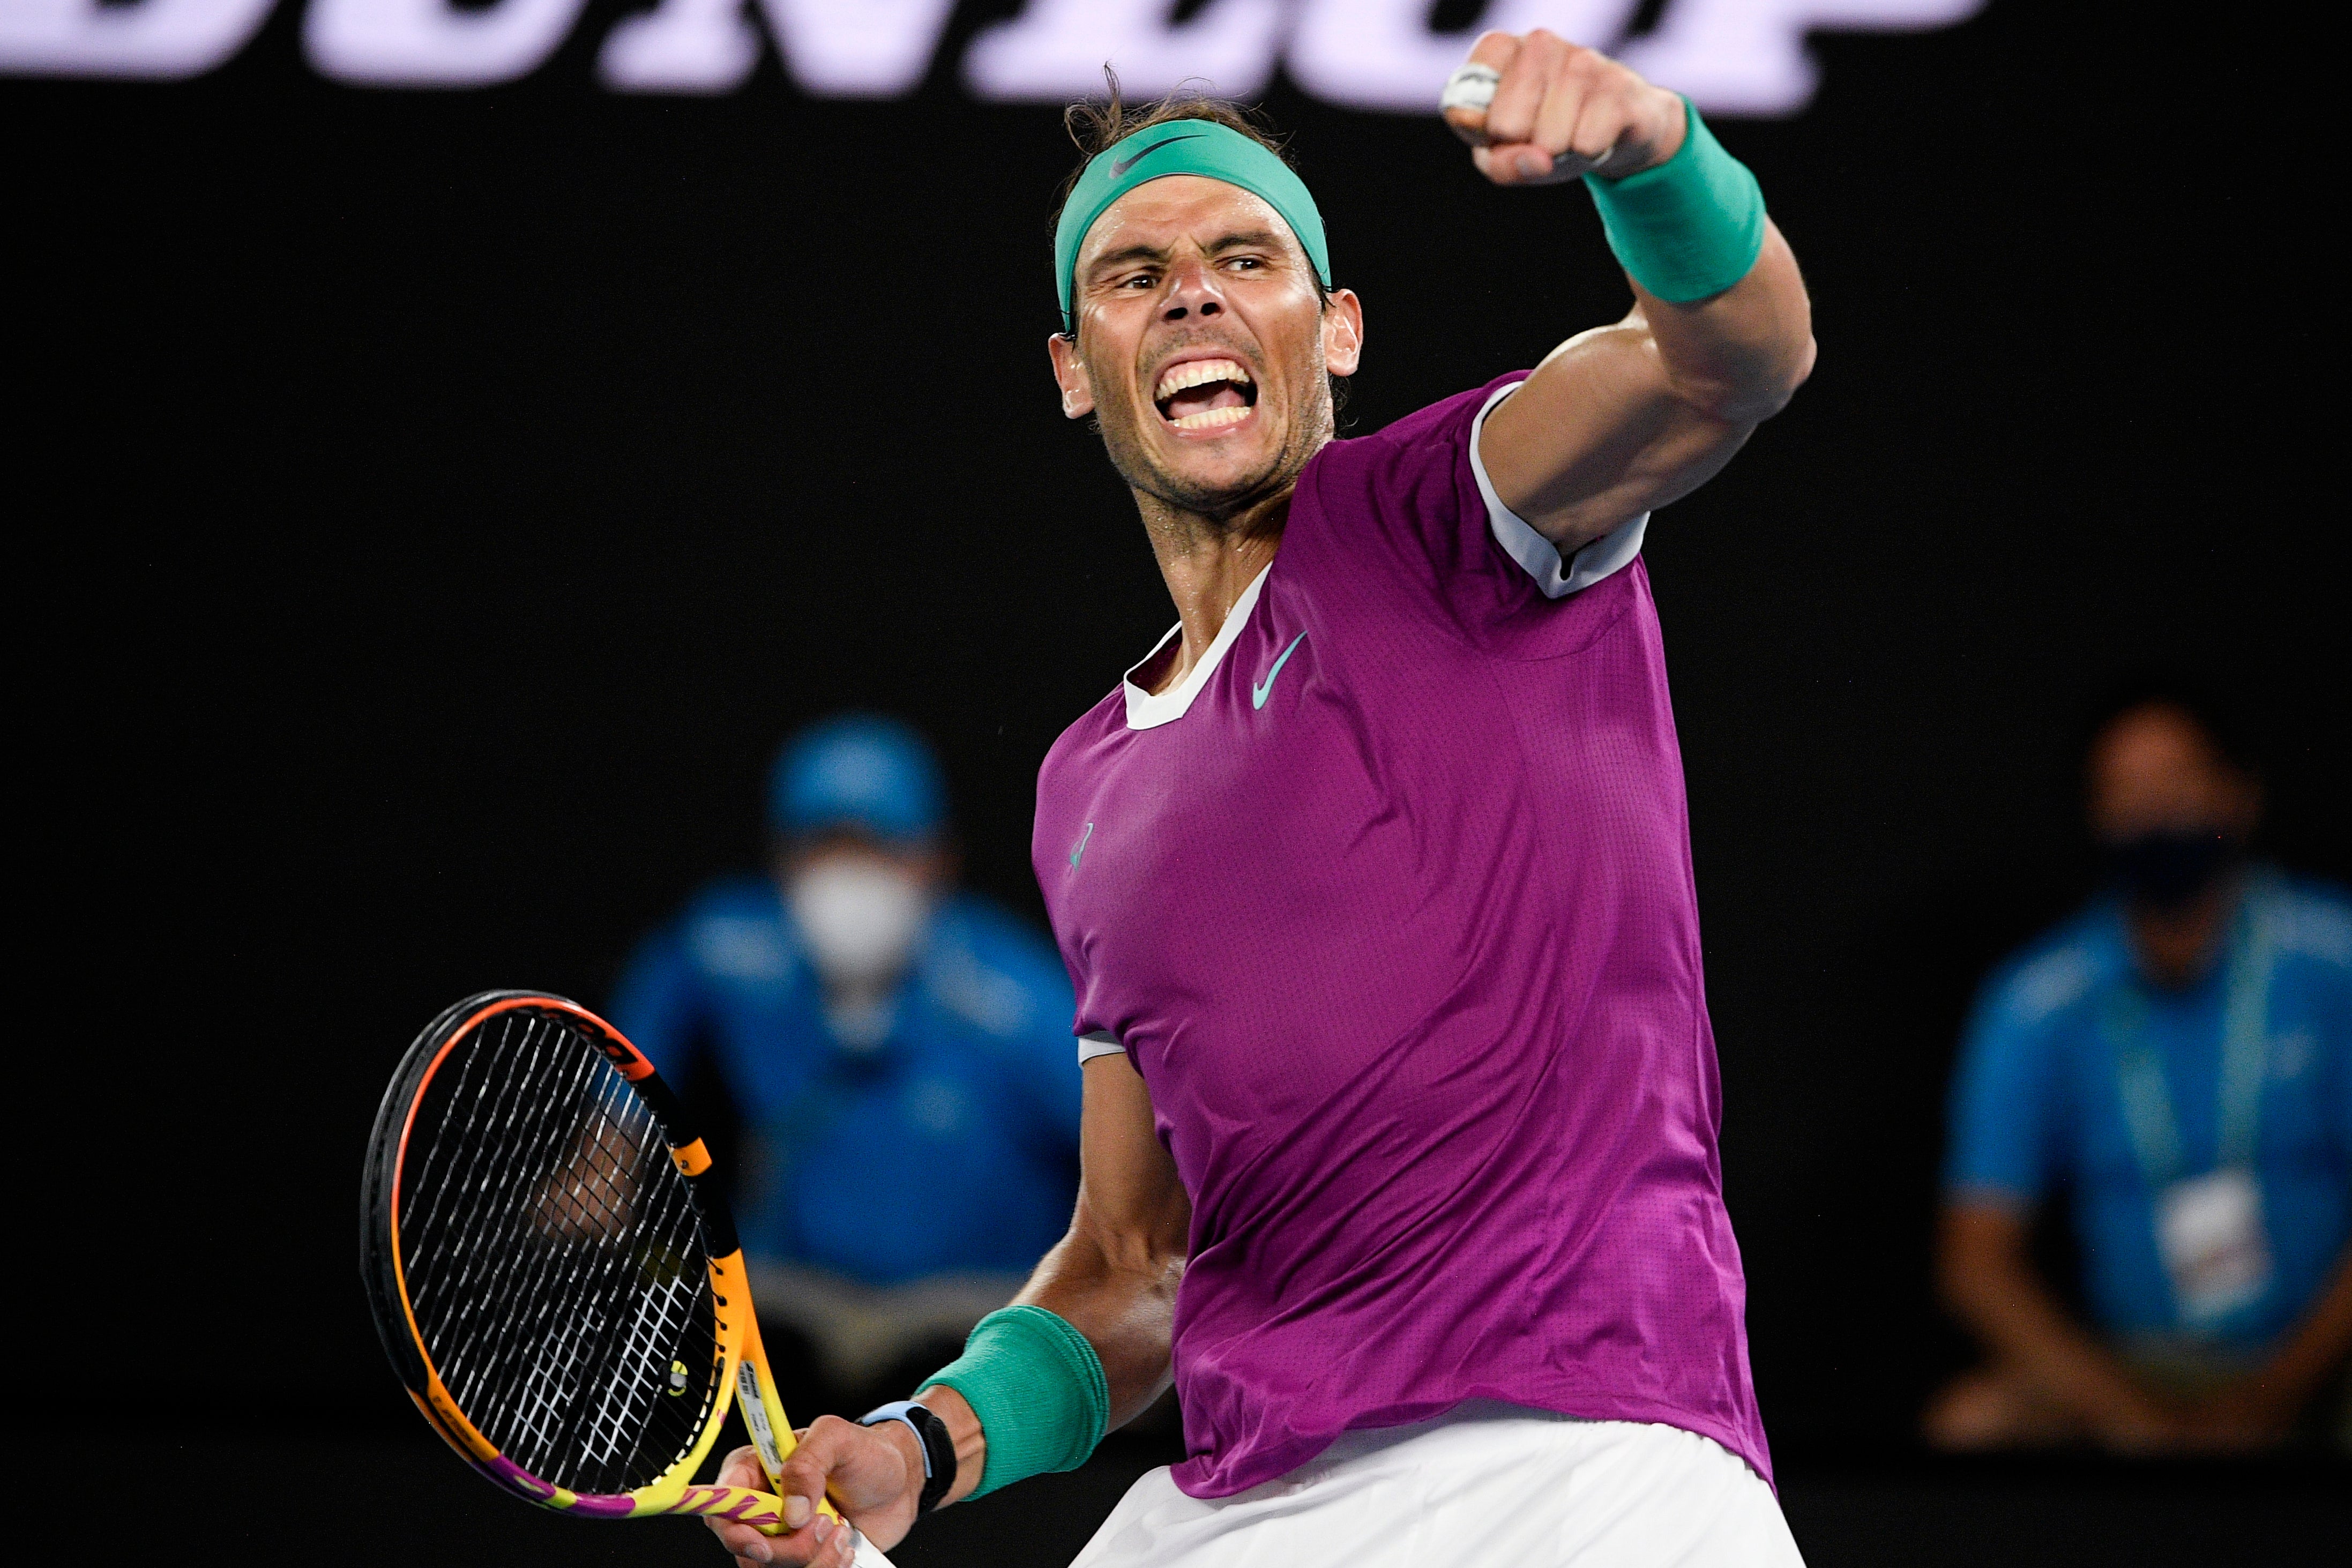 Rafael Nadal celebrates his win over Karen Khachanov